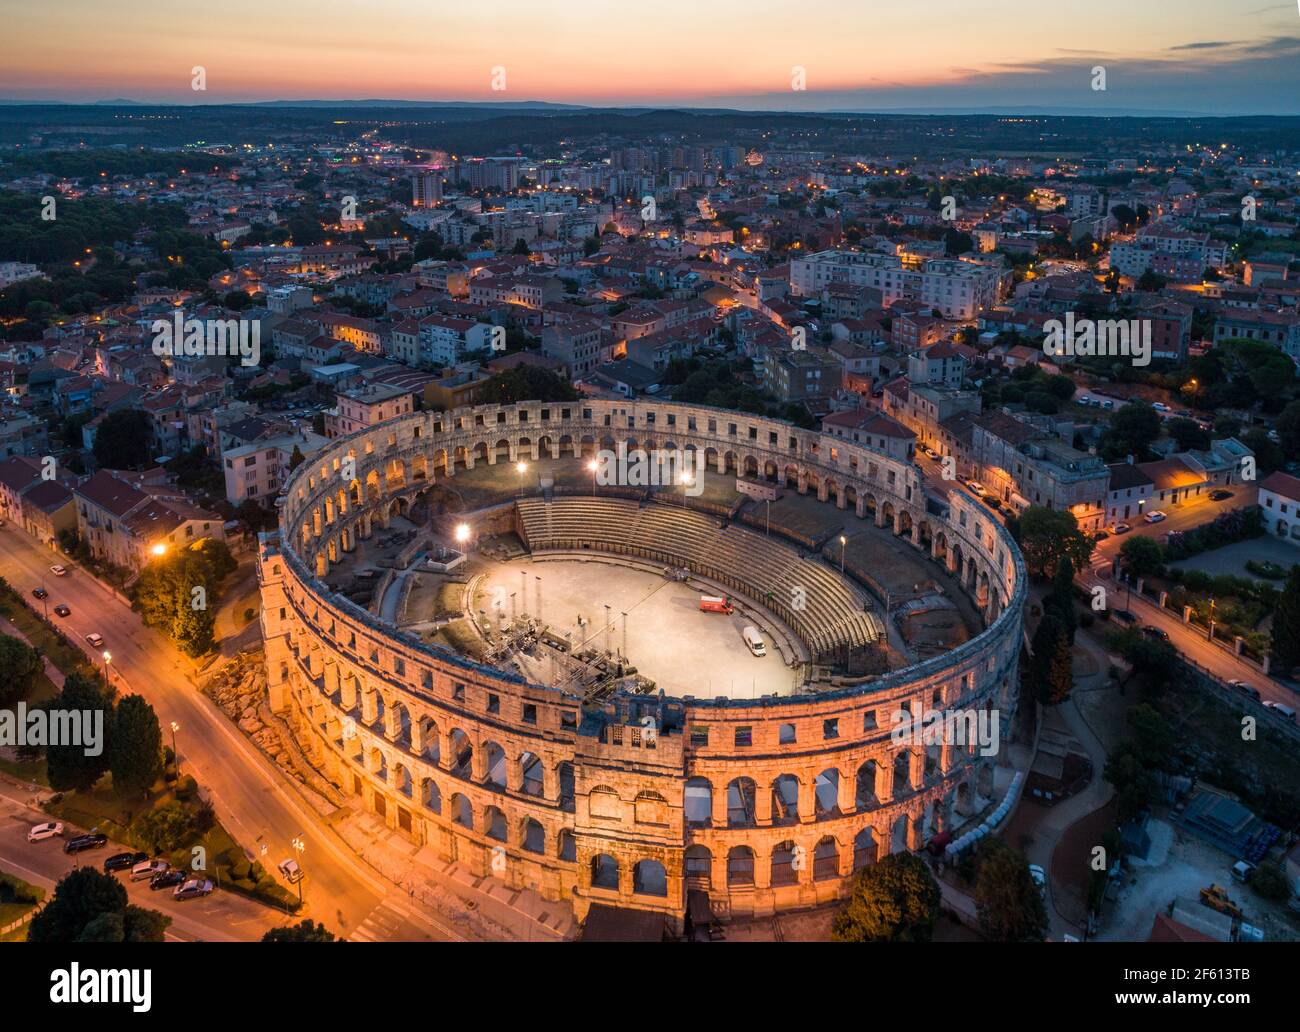 Aerial photo of Arena in Pula, Croatia at night Stock Photo